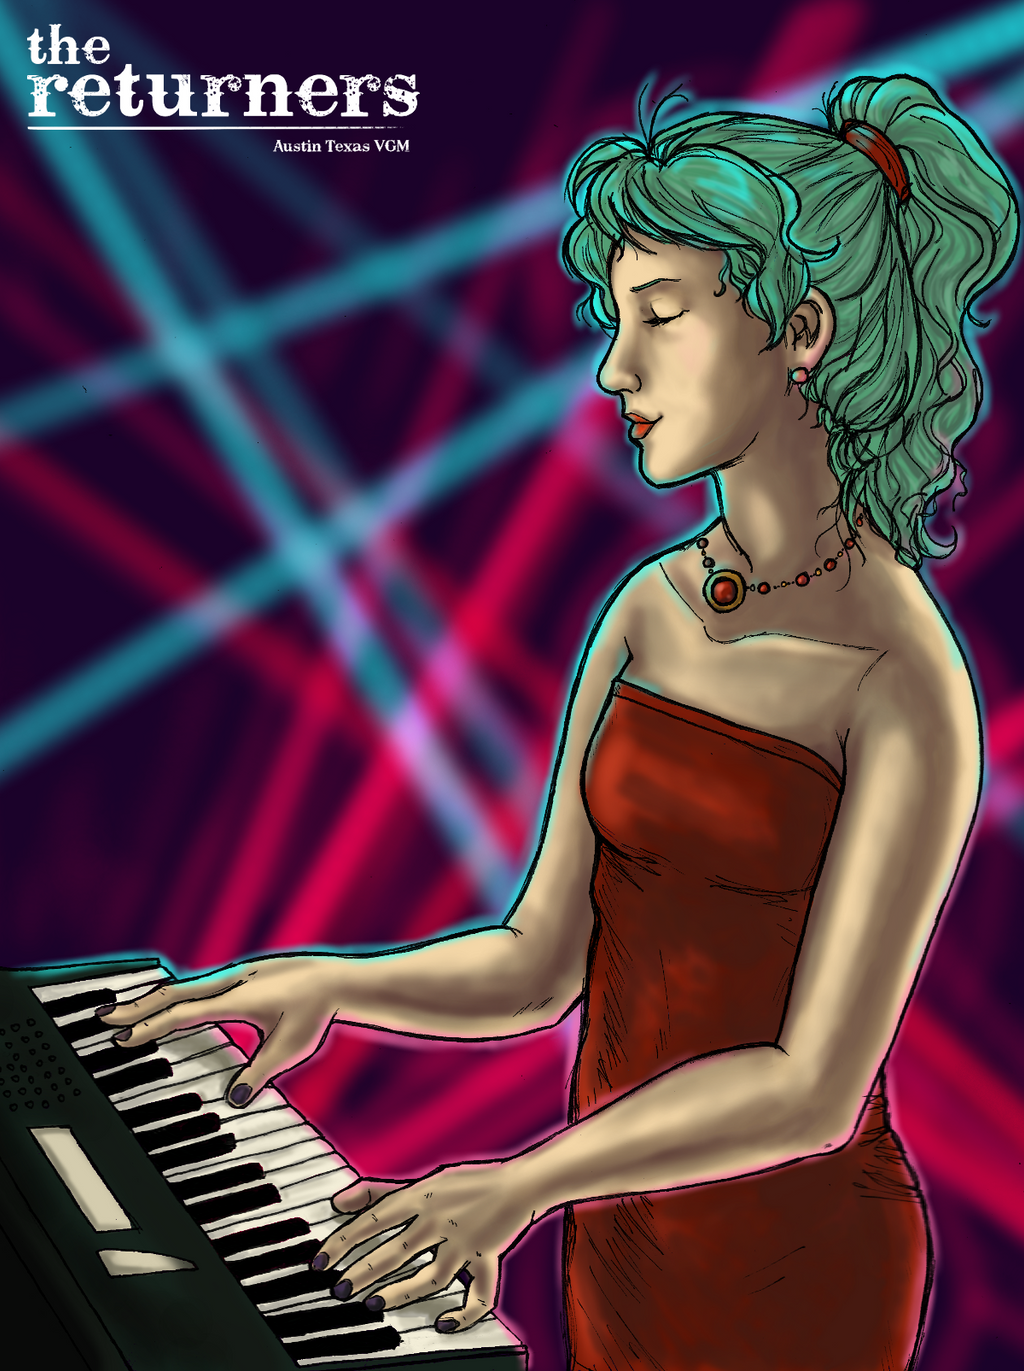 Terra Branford as Keyboardist